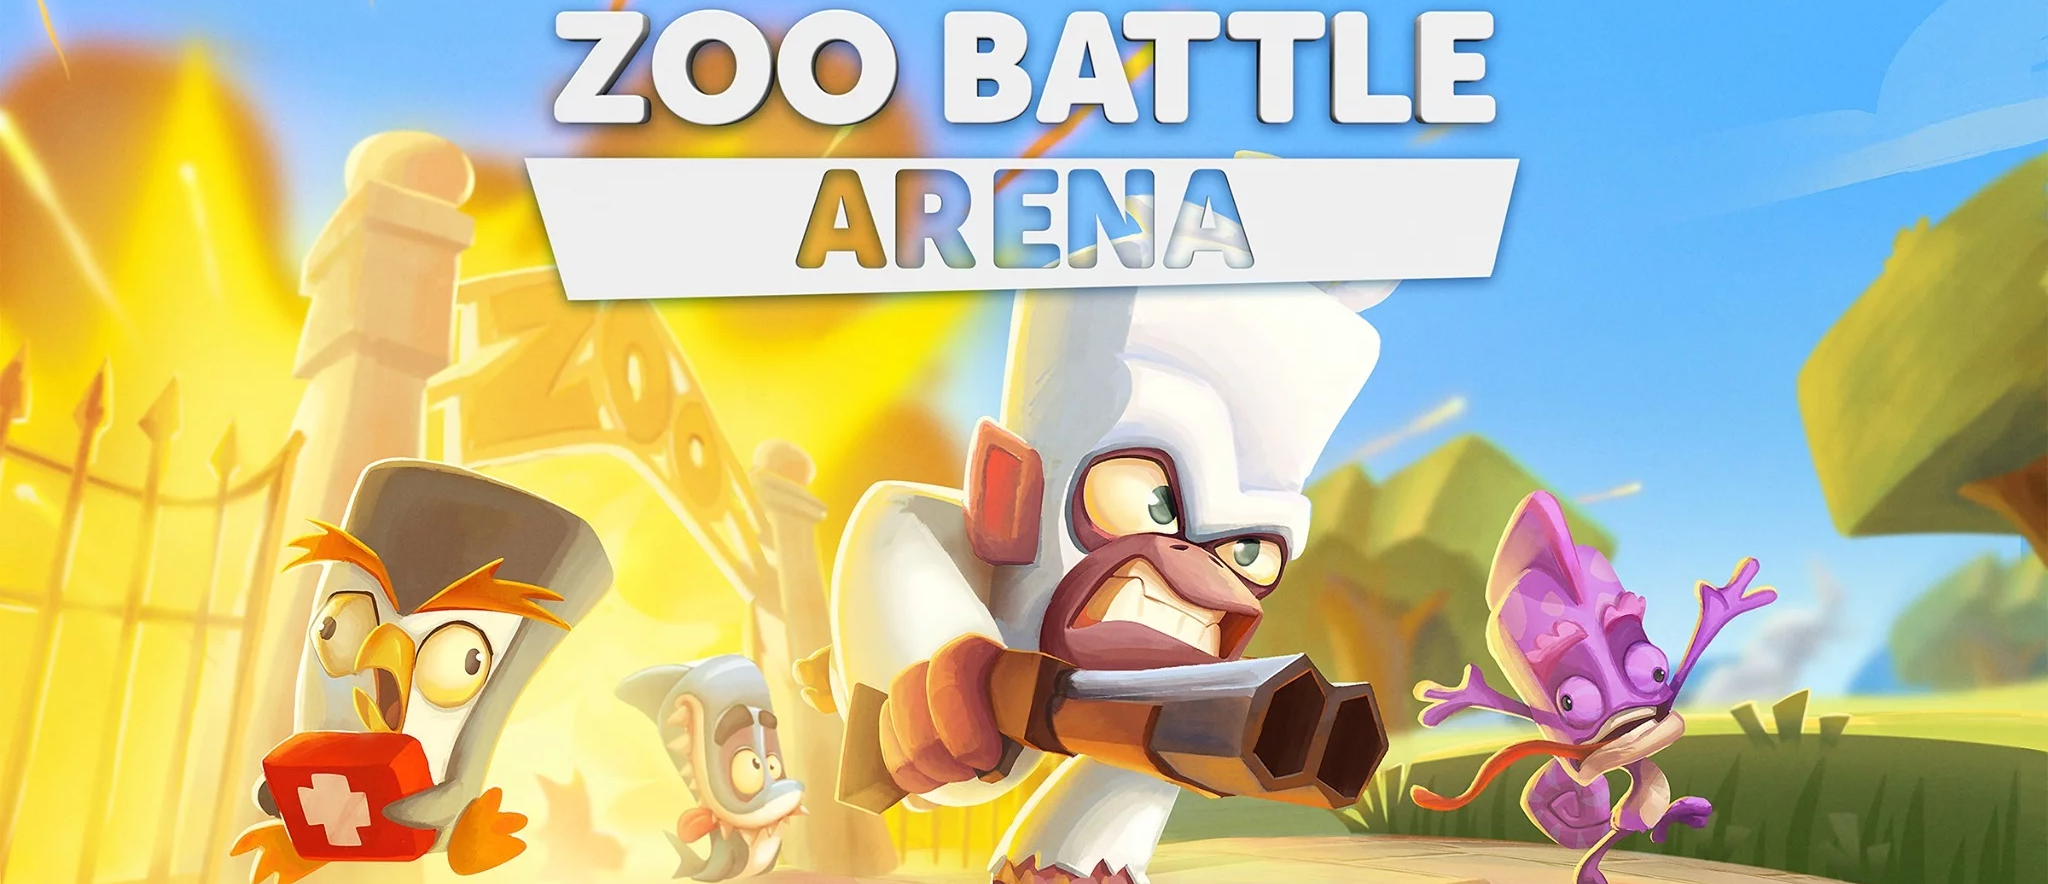 Stiahnite si Zooba: Free-for-all - Adventure Battle Game na PC 265